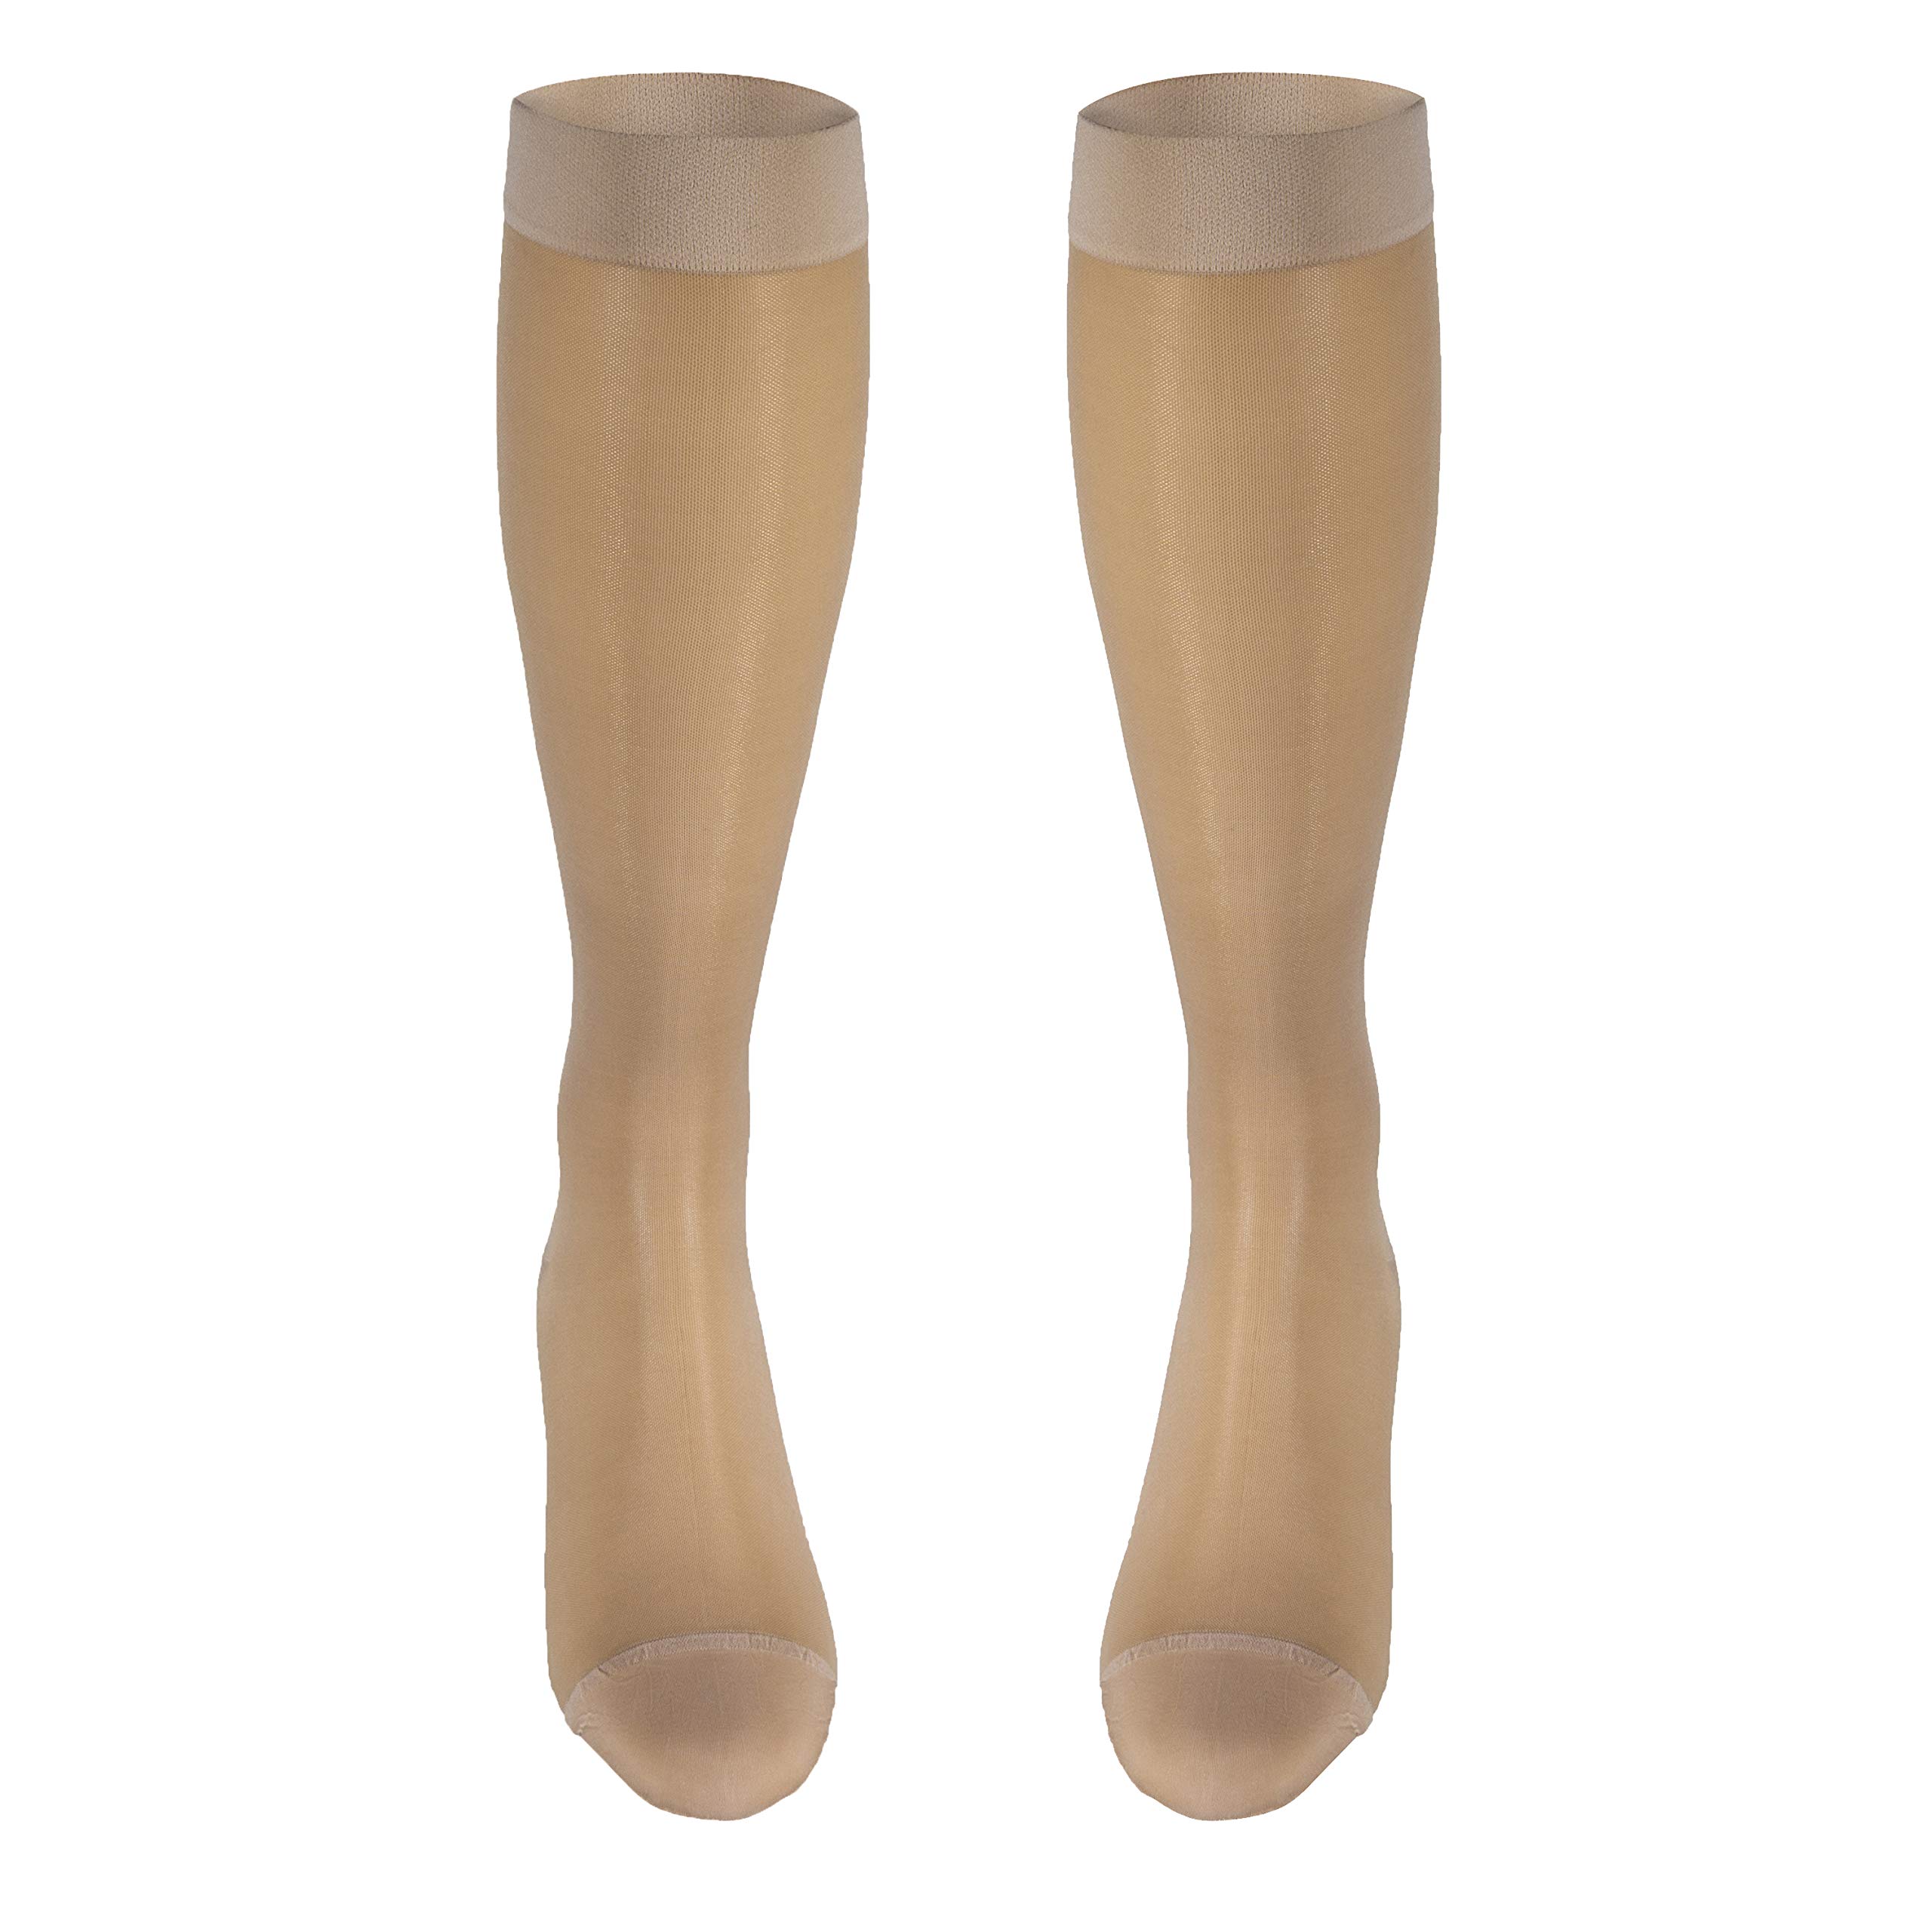 Truform Sheer Compression Stockings, 15-20 mmHg, Women's Knee High Length, 20 Denier, Nude, Medium